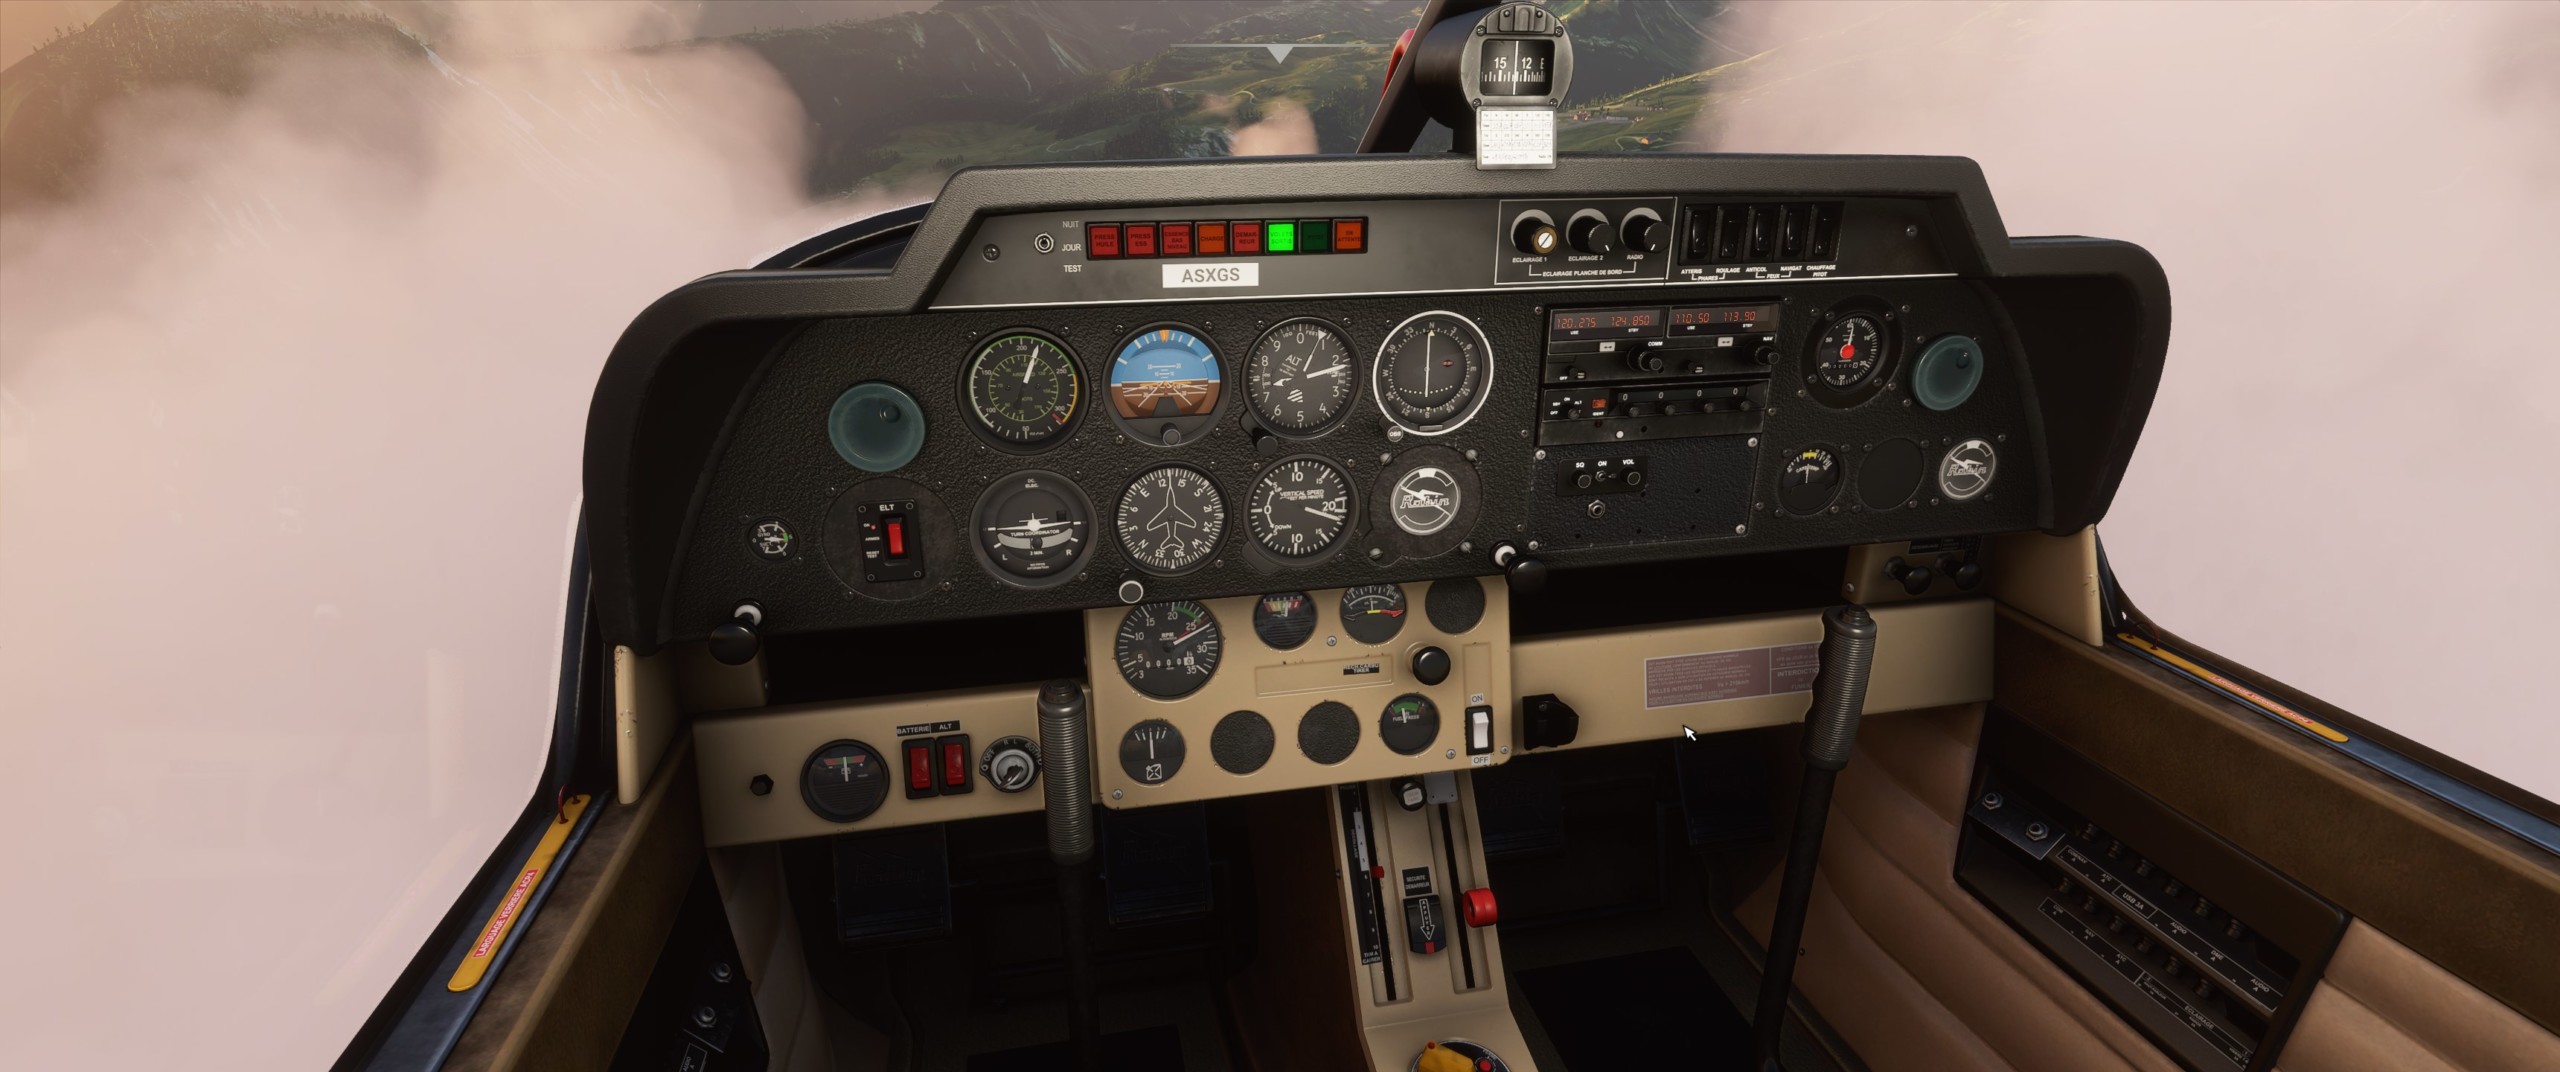 flight simulator x without joystick